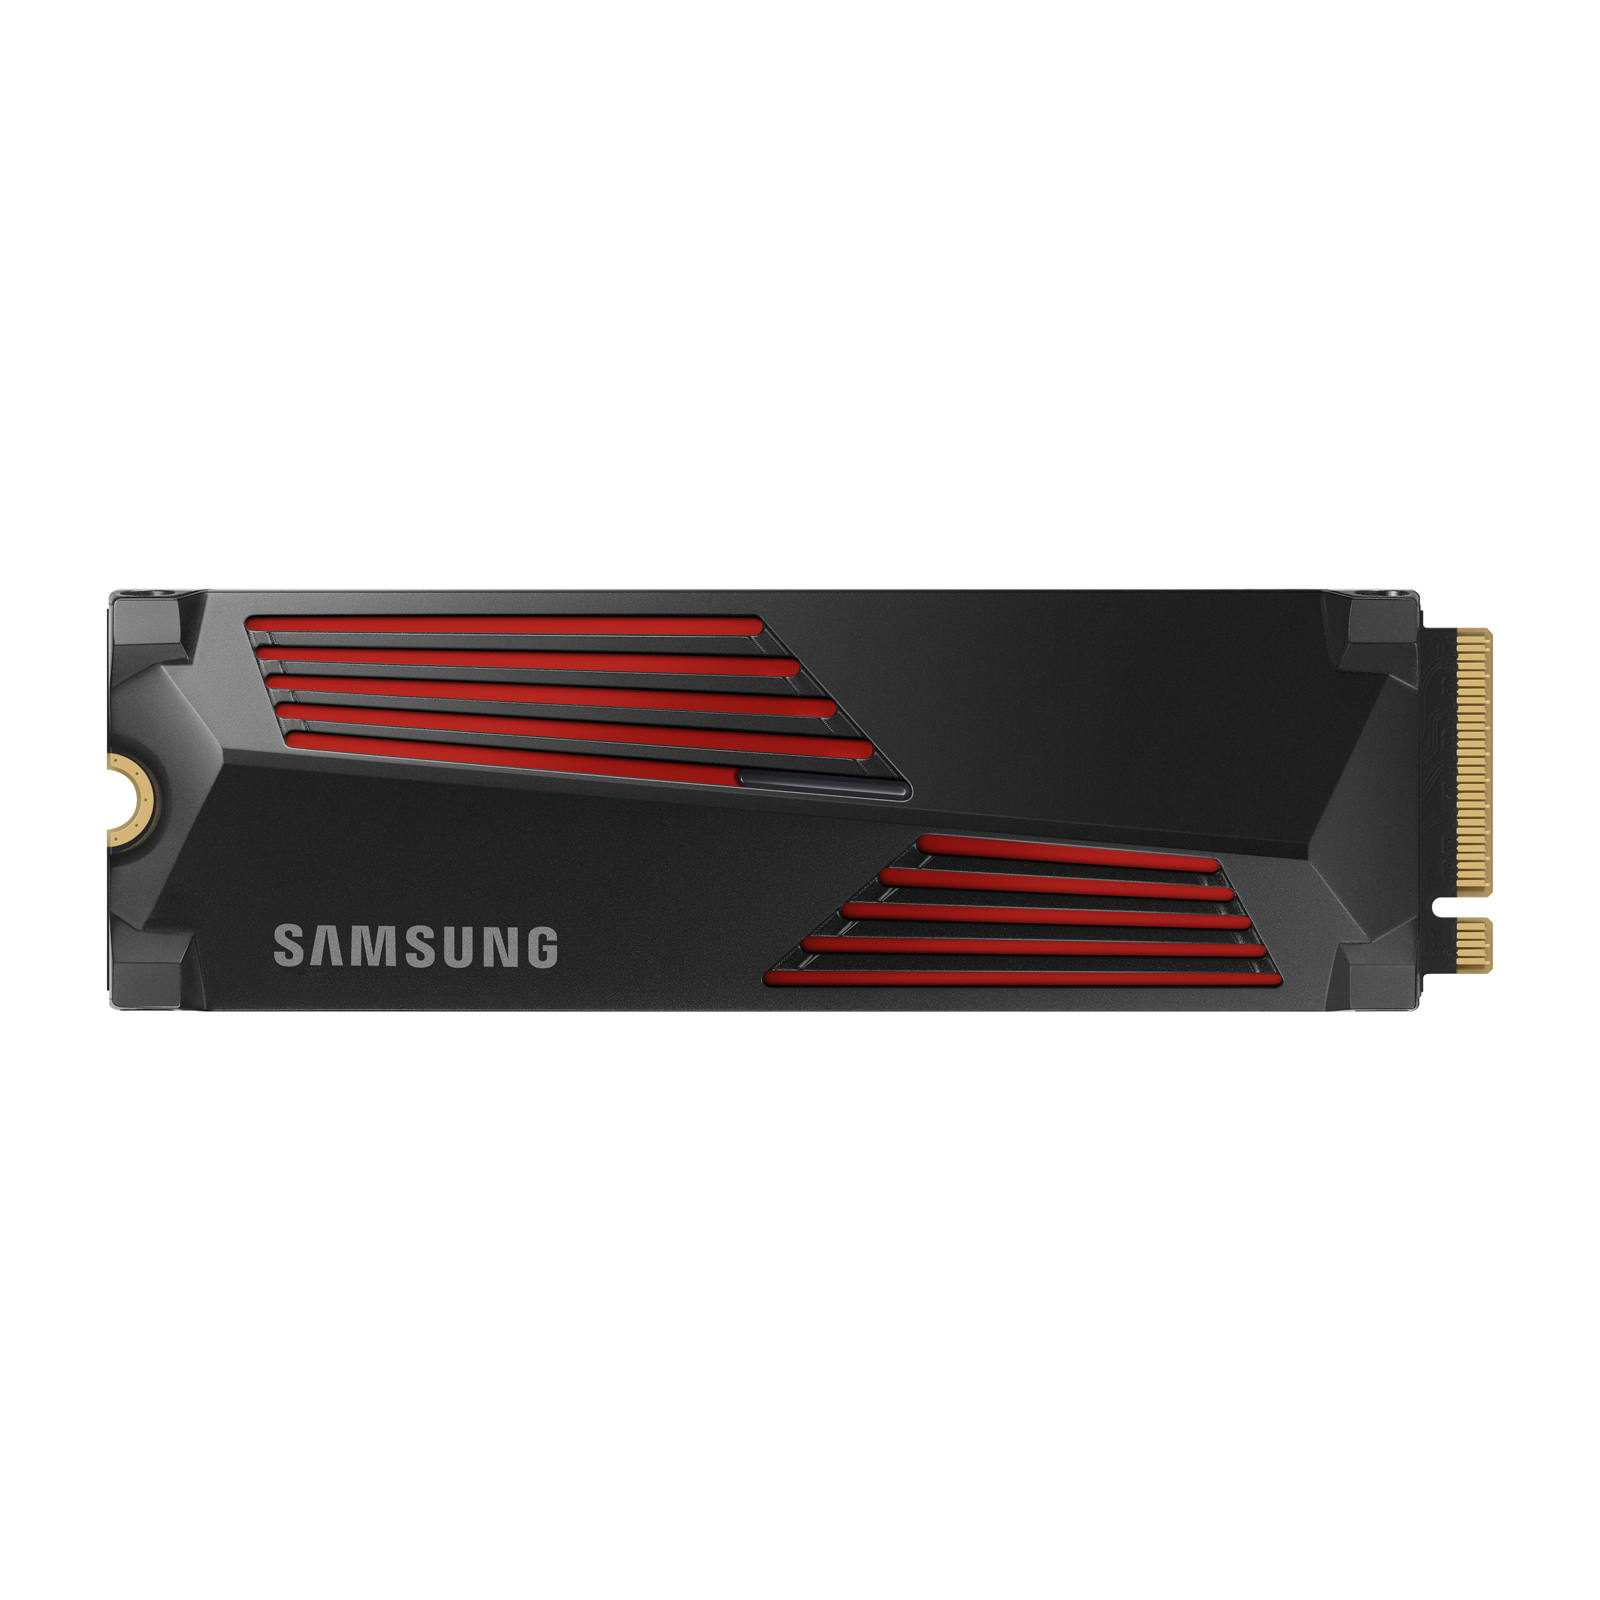 Samsung NVMe M.2 SSD 990 PRO with Heatsink (2TB)